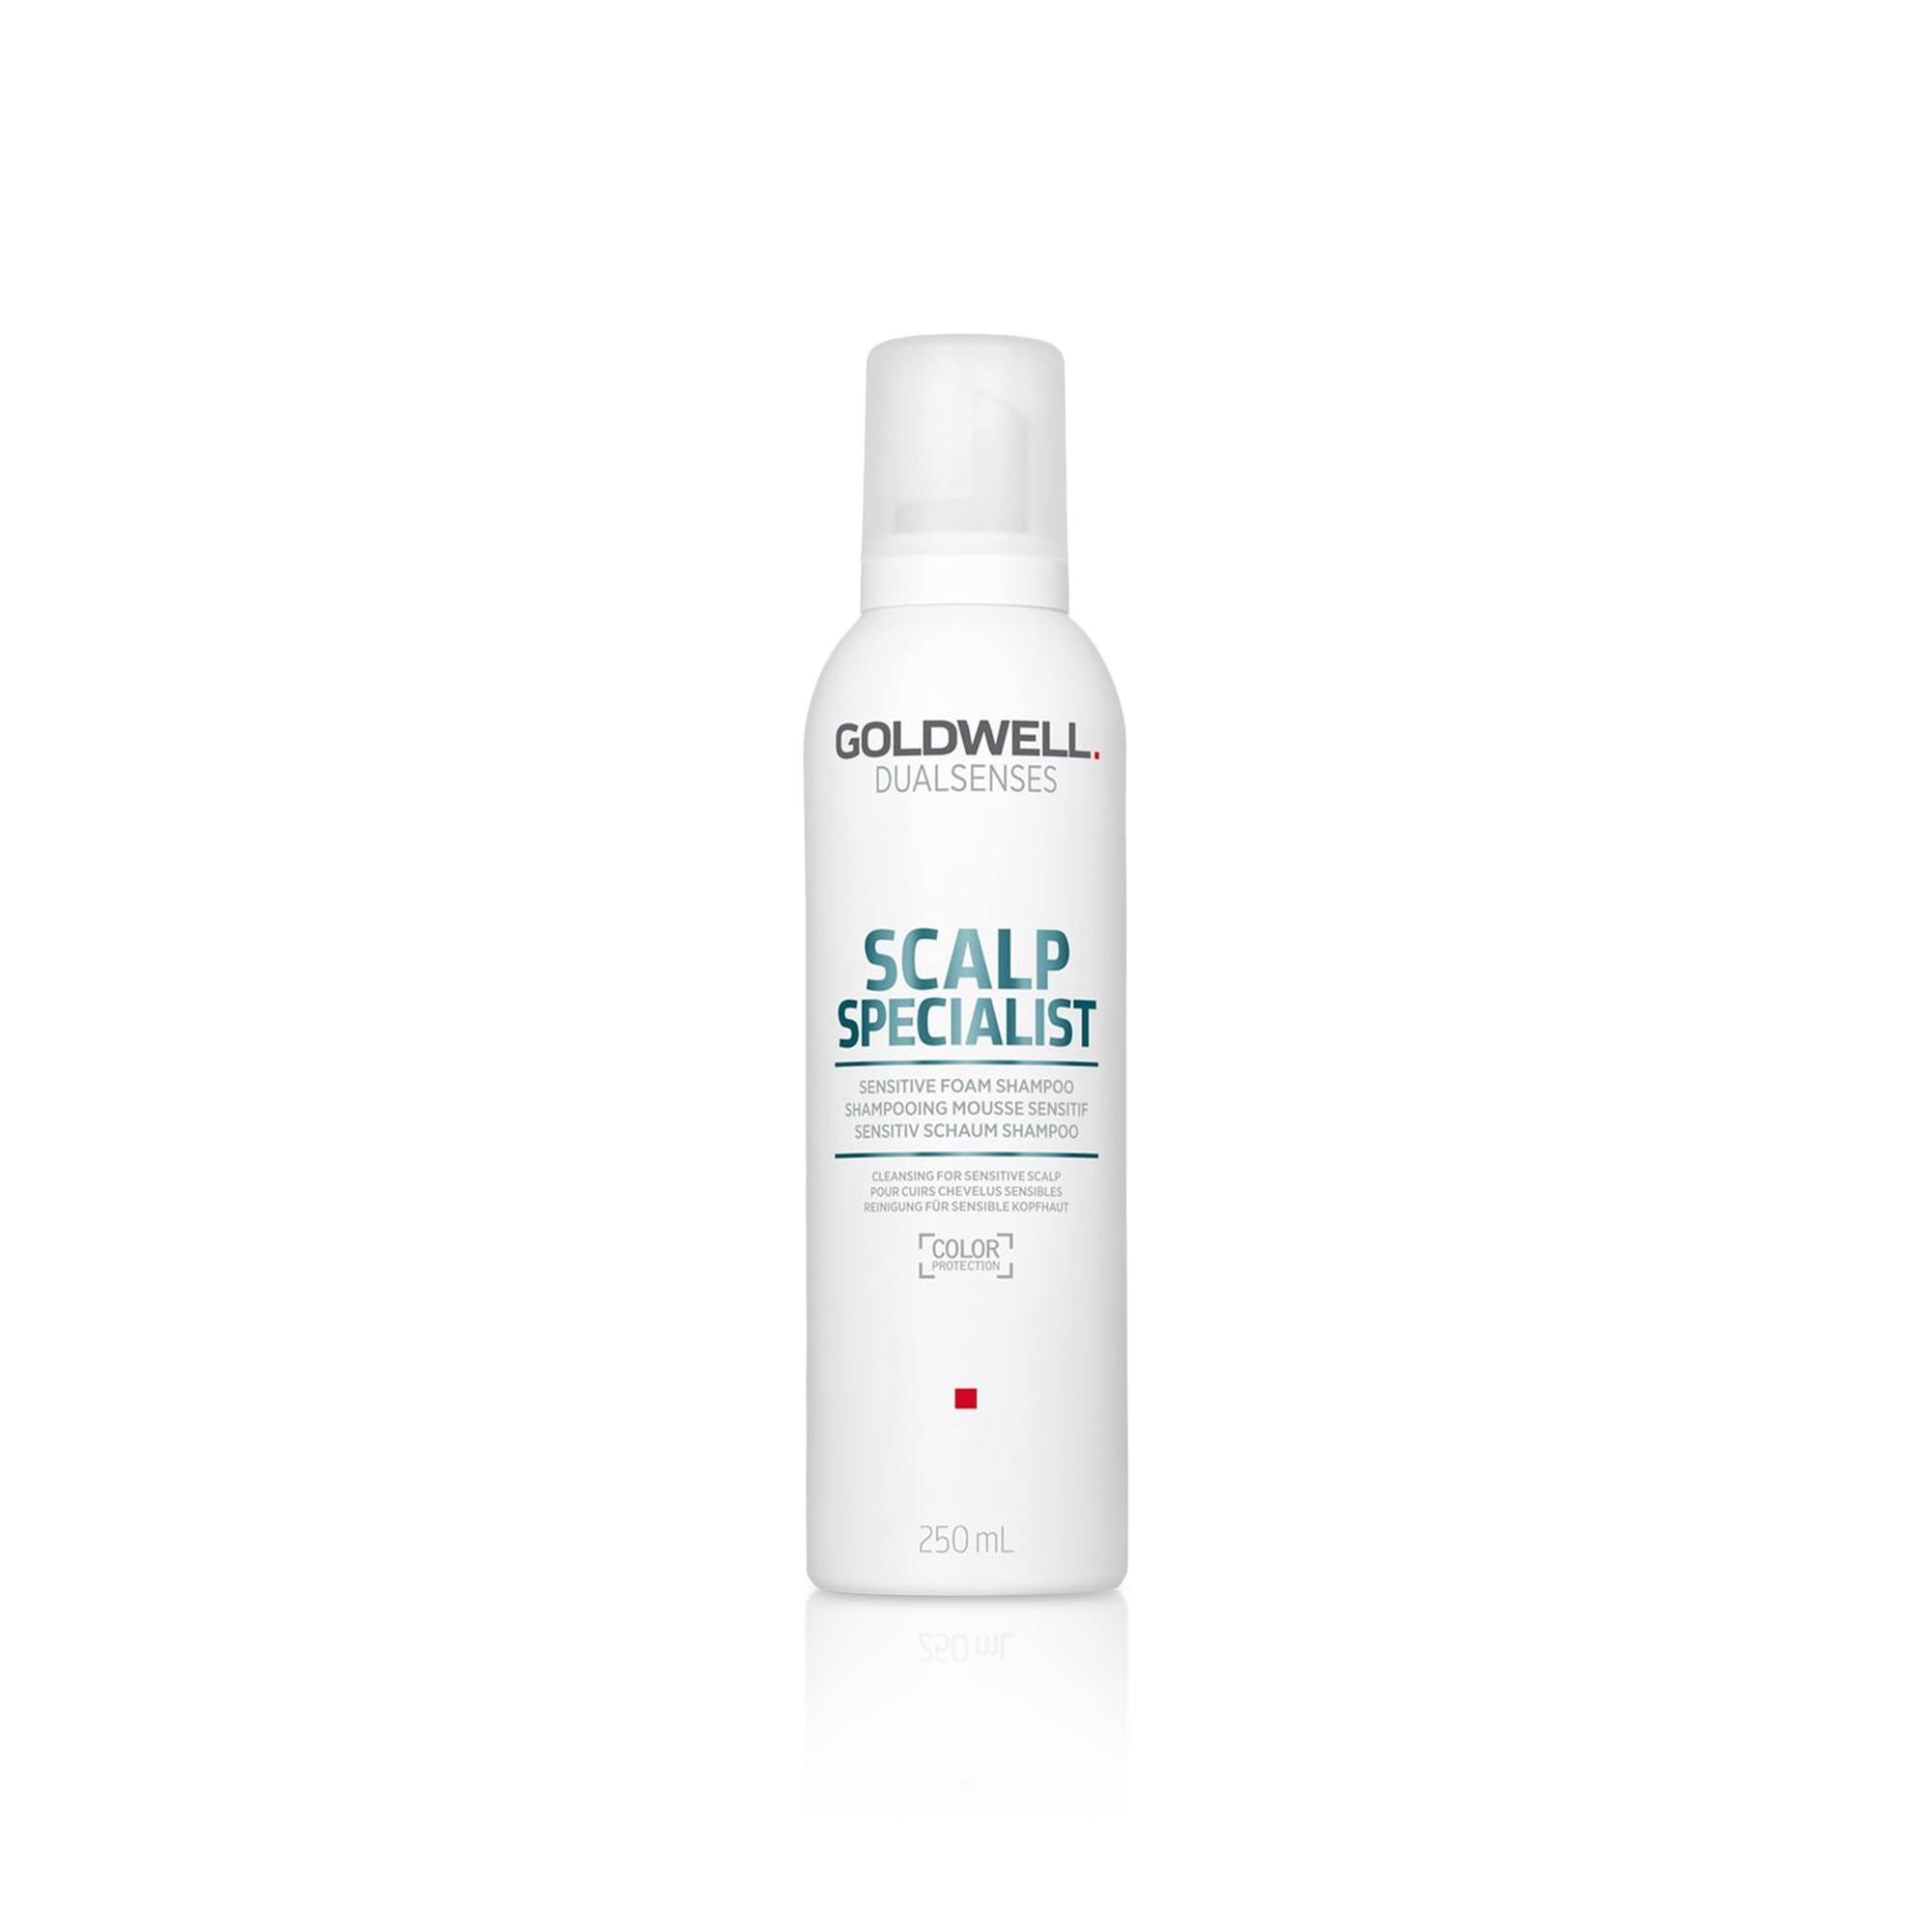 Dualsenses Scalp Specialist Sensitive Foam Shampoo